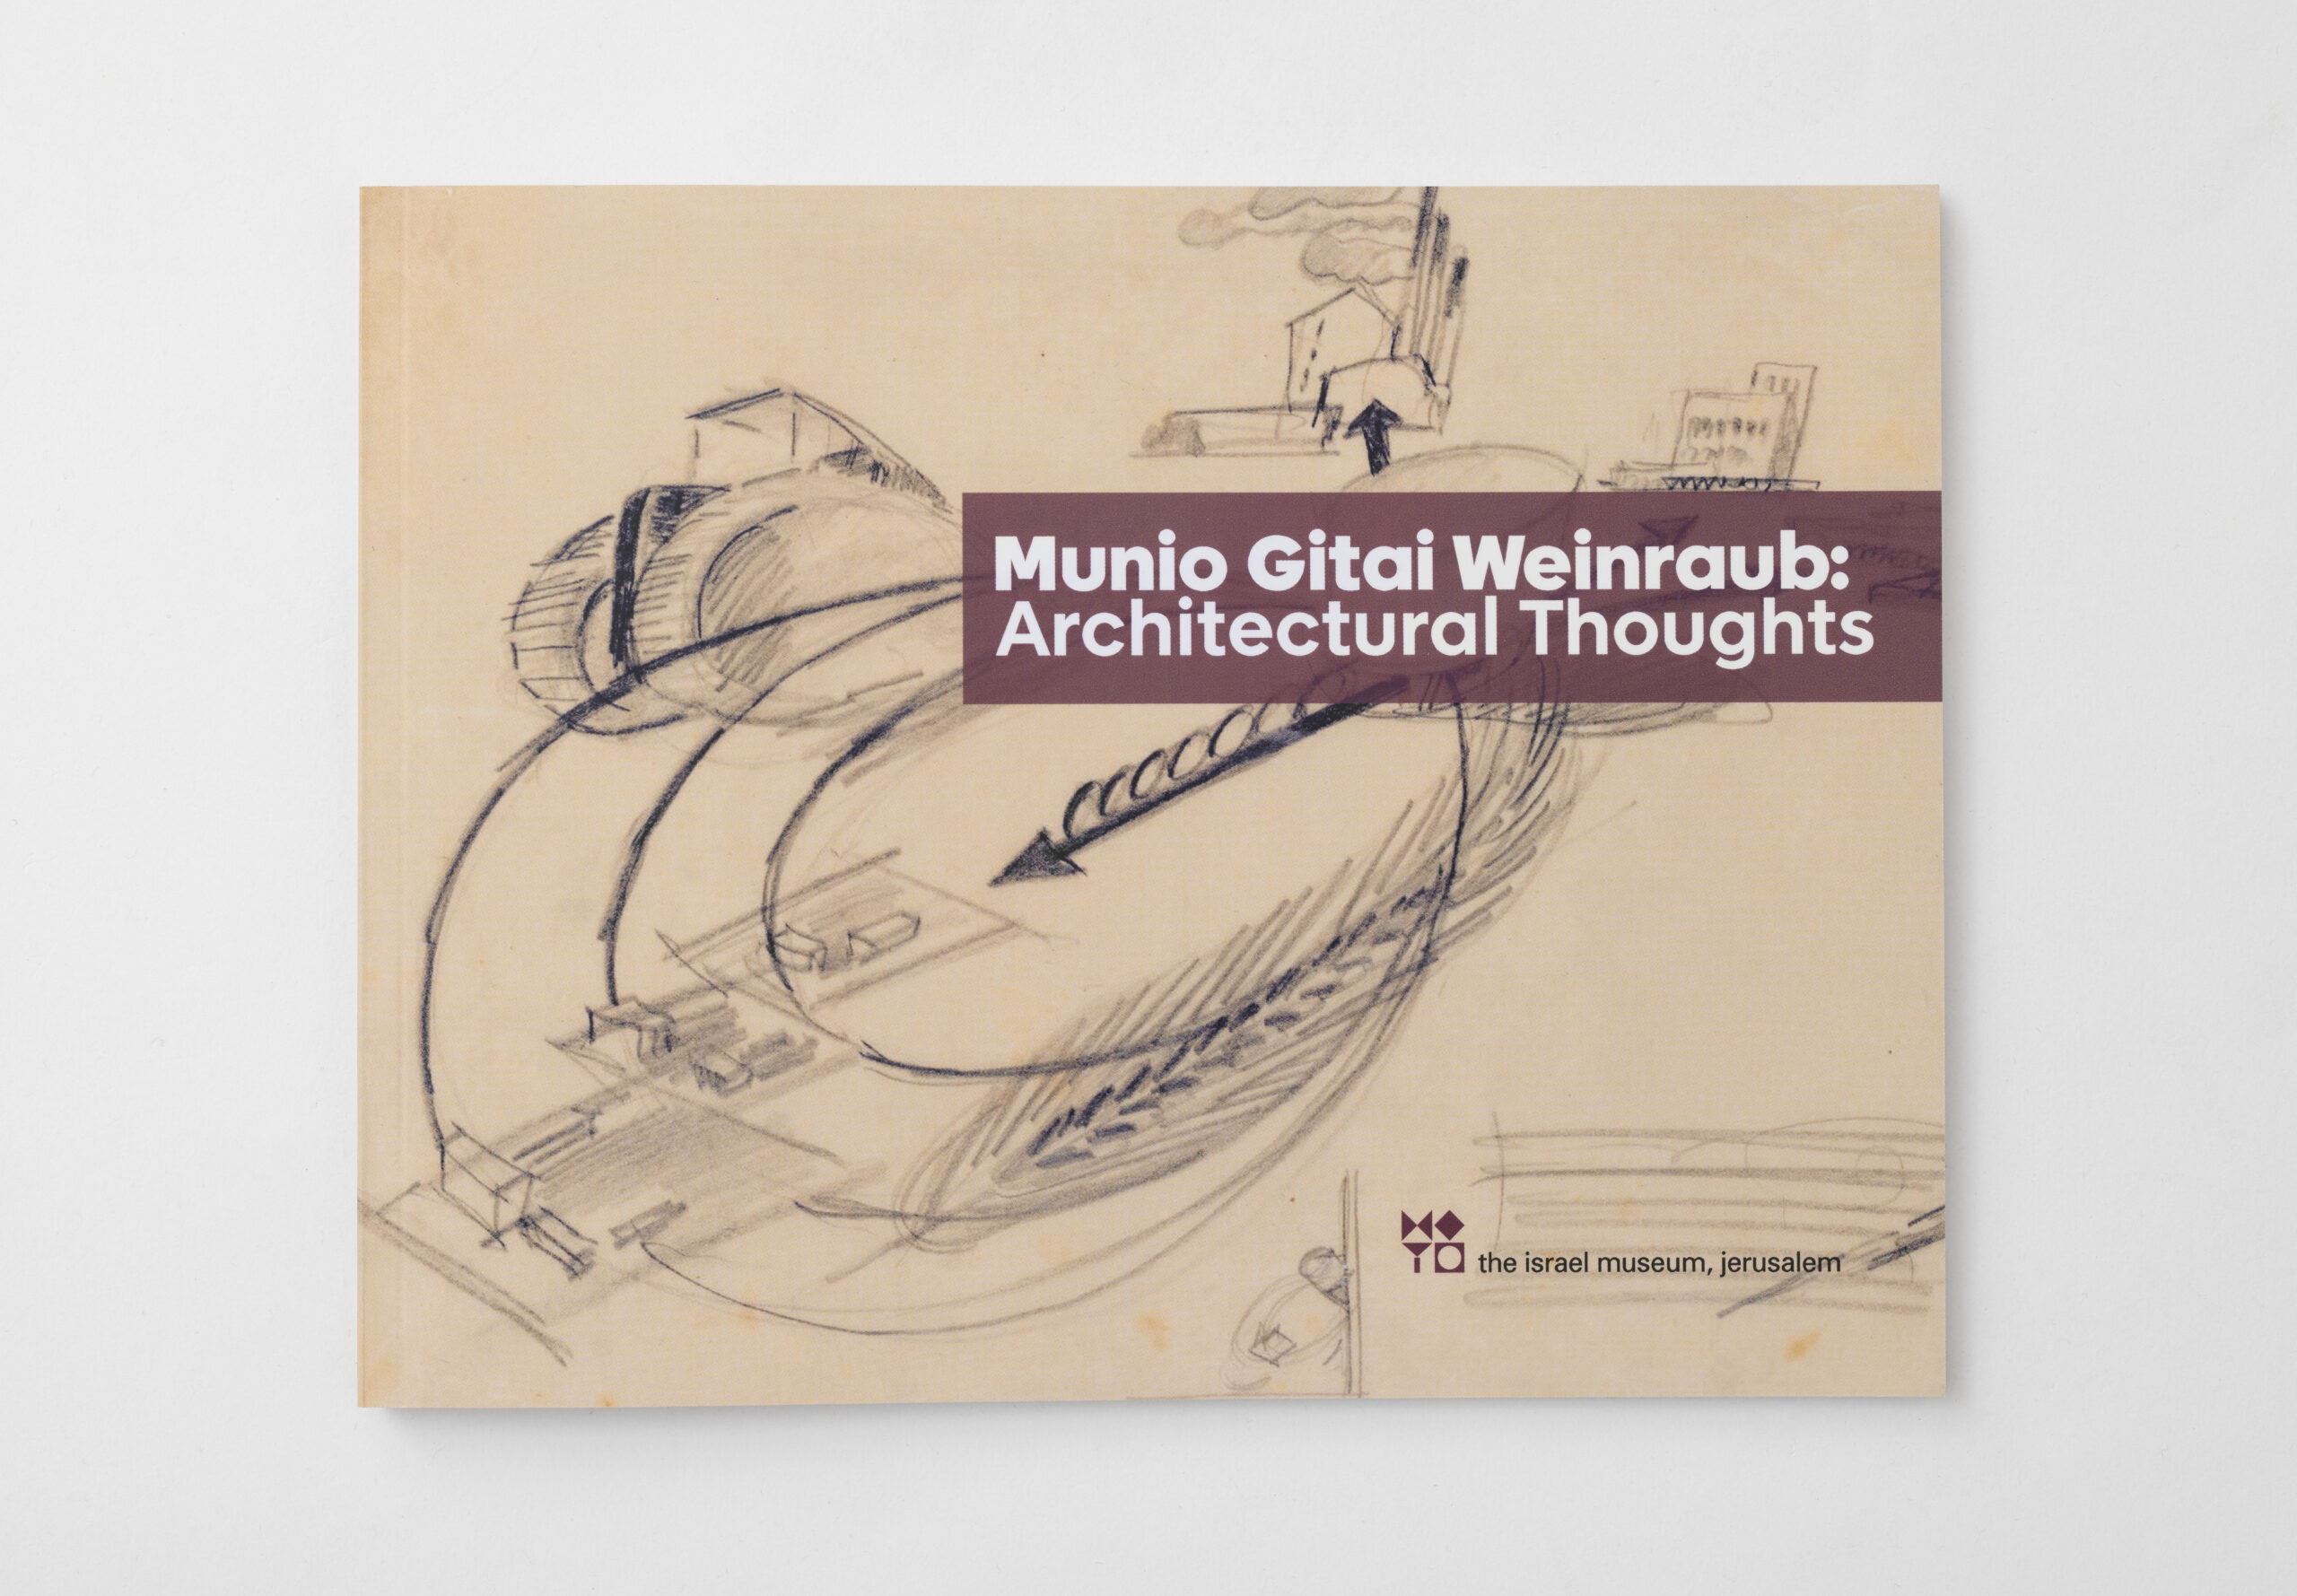 Munio Gitai Weinraub: Architectural Thoughts